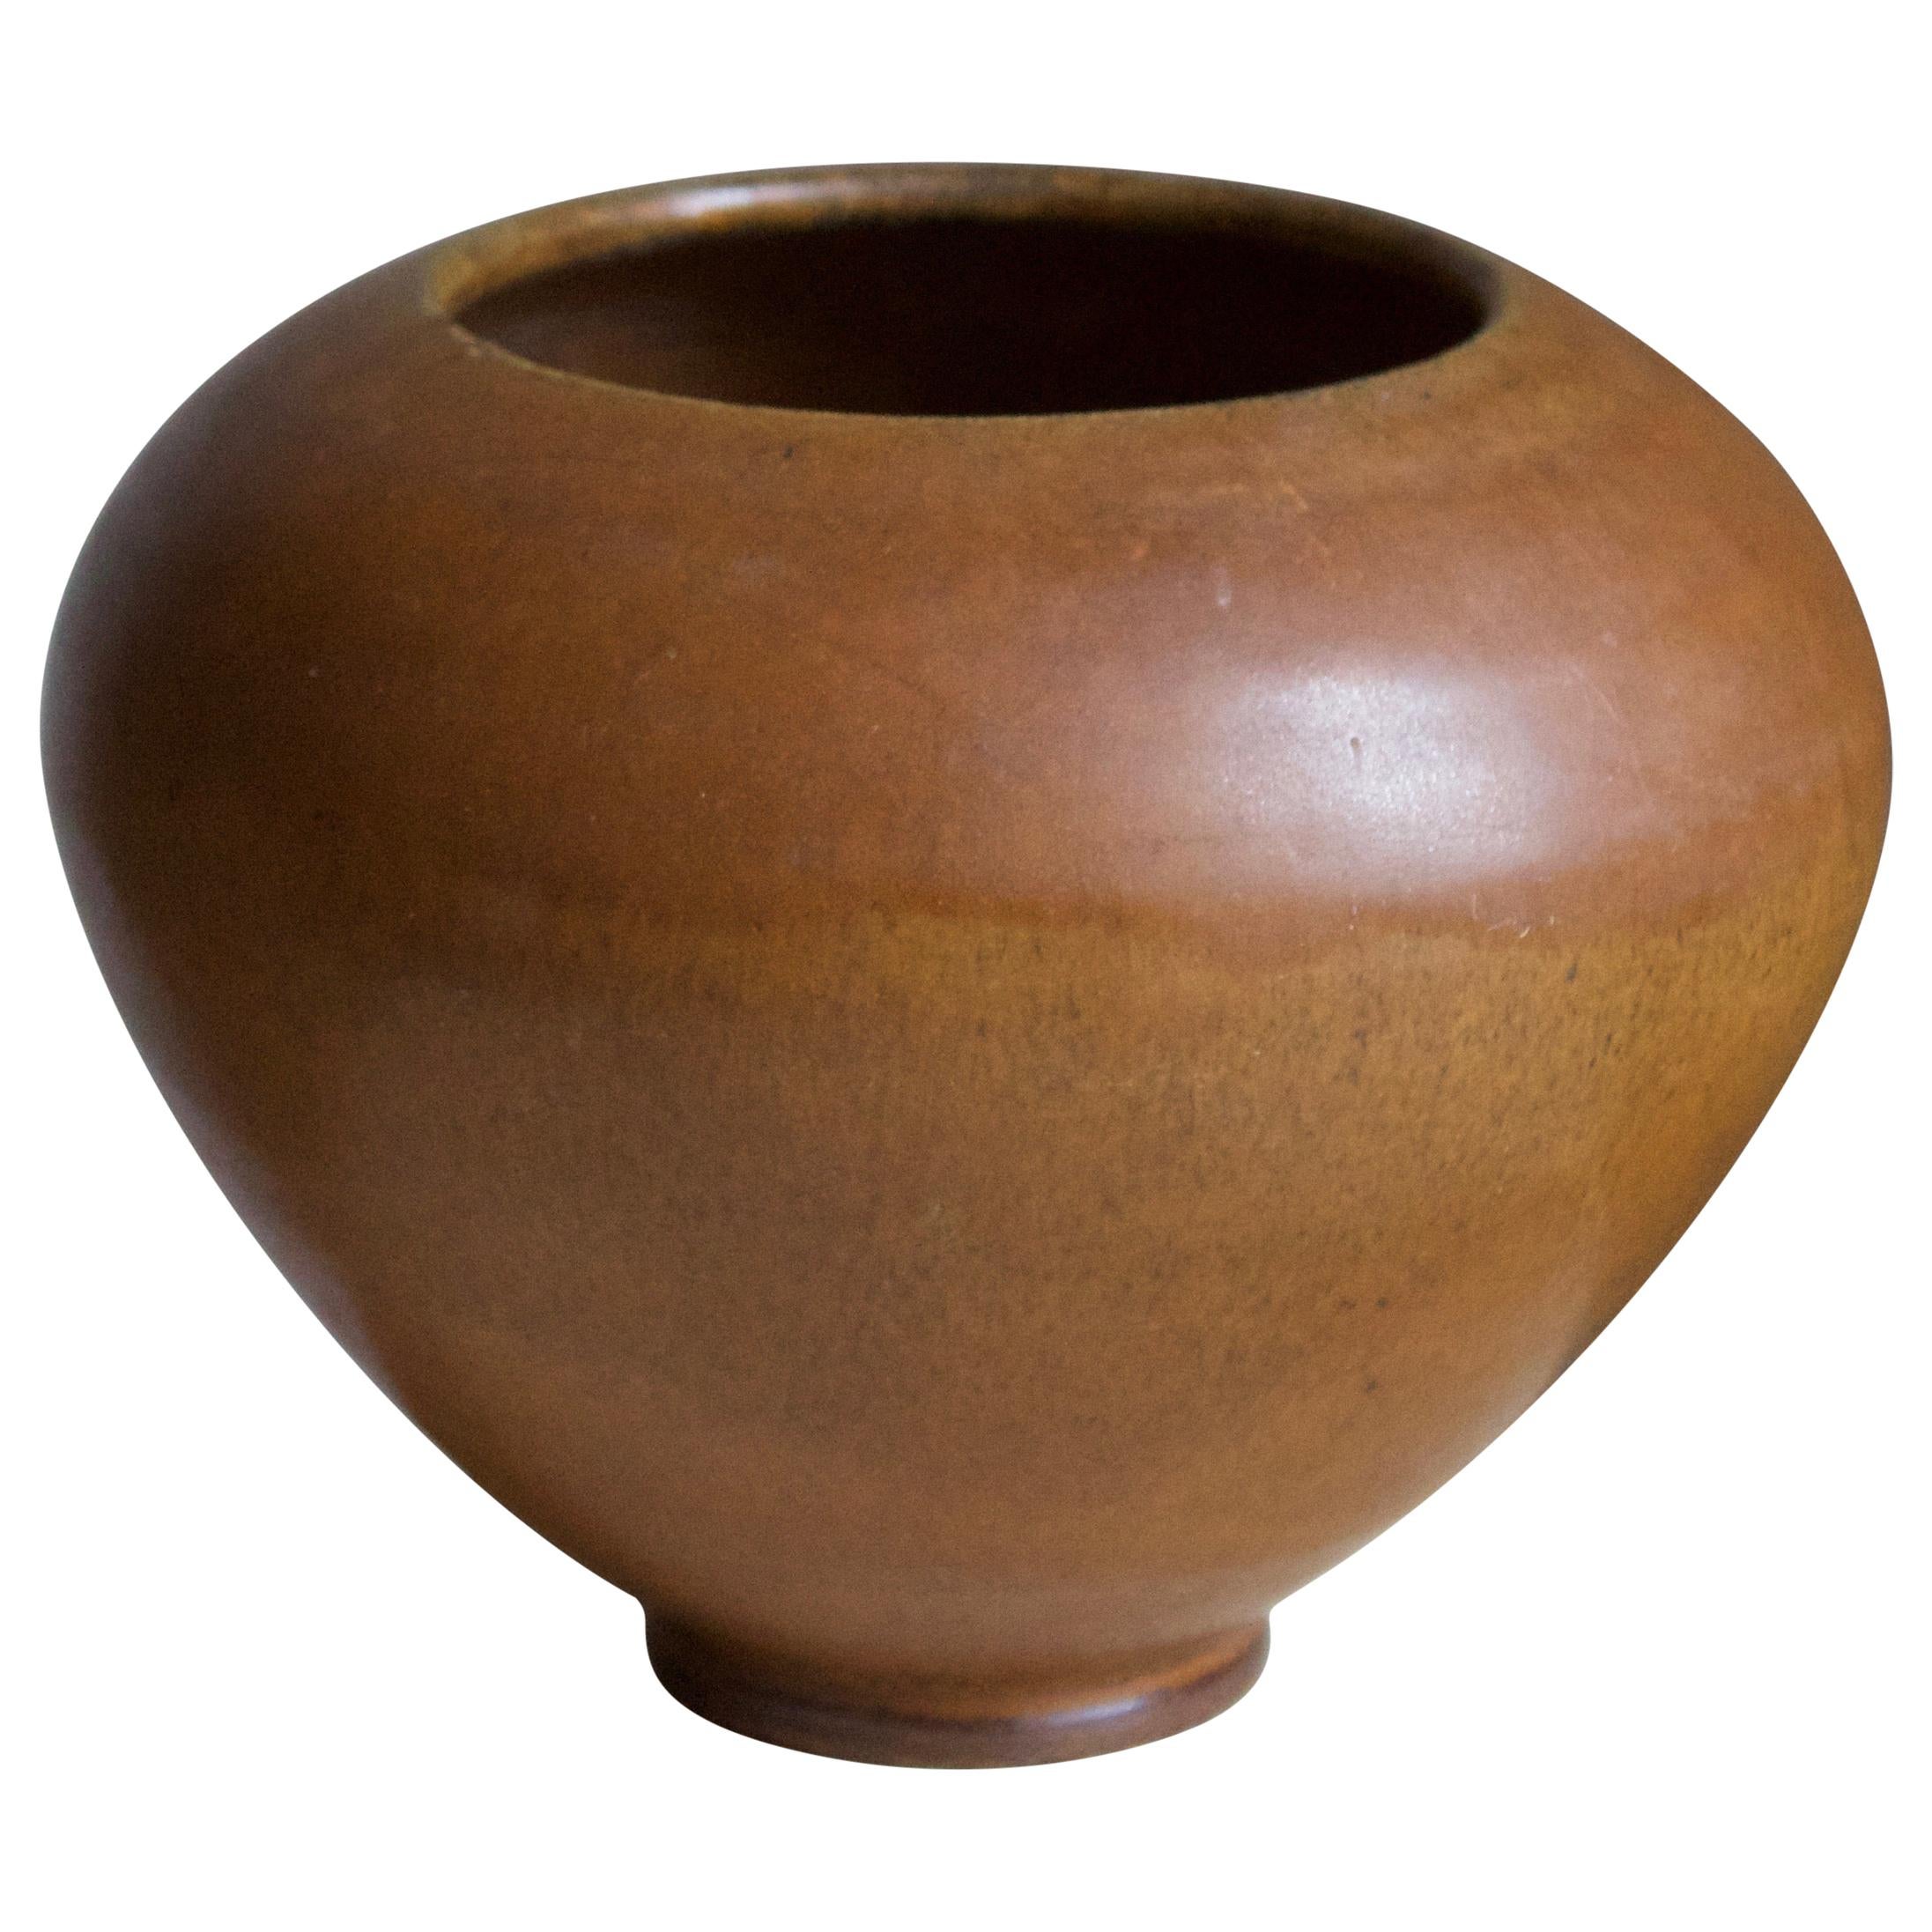 Herman Kähler, Vase, Brown Glazed Stoneware, Denmark, C. 1900